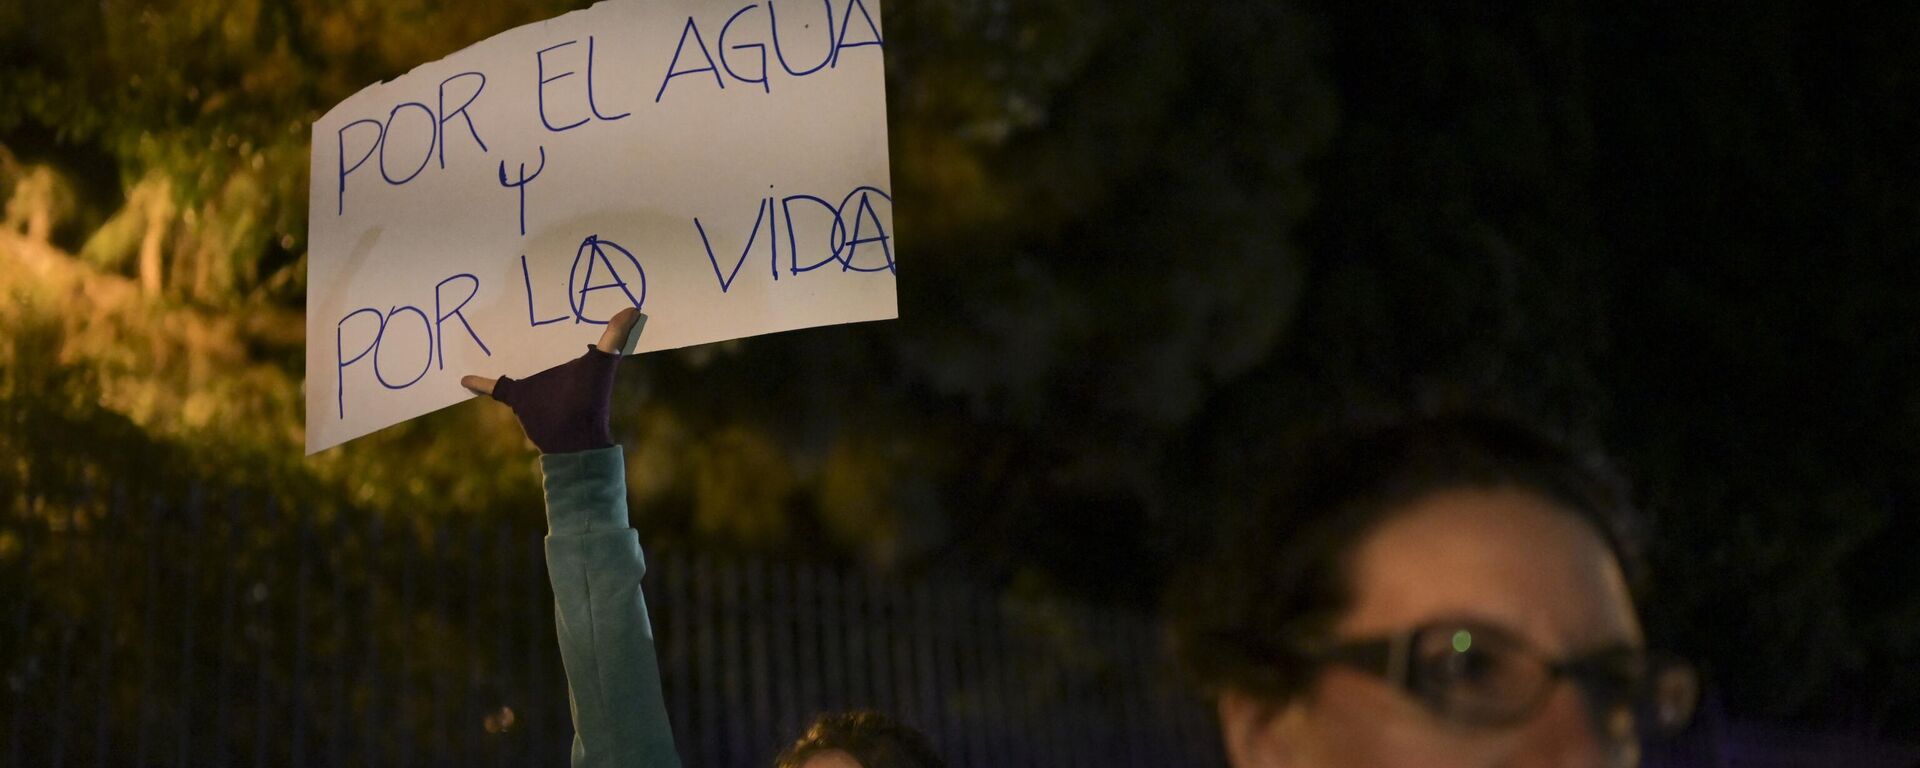 Protesta por la crisis del agua potable en Uruguay - Sputnik Mundo, 1920, 23.05.2023